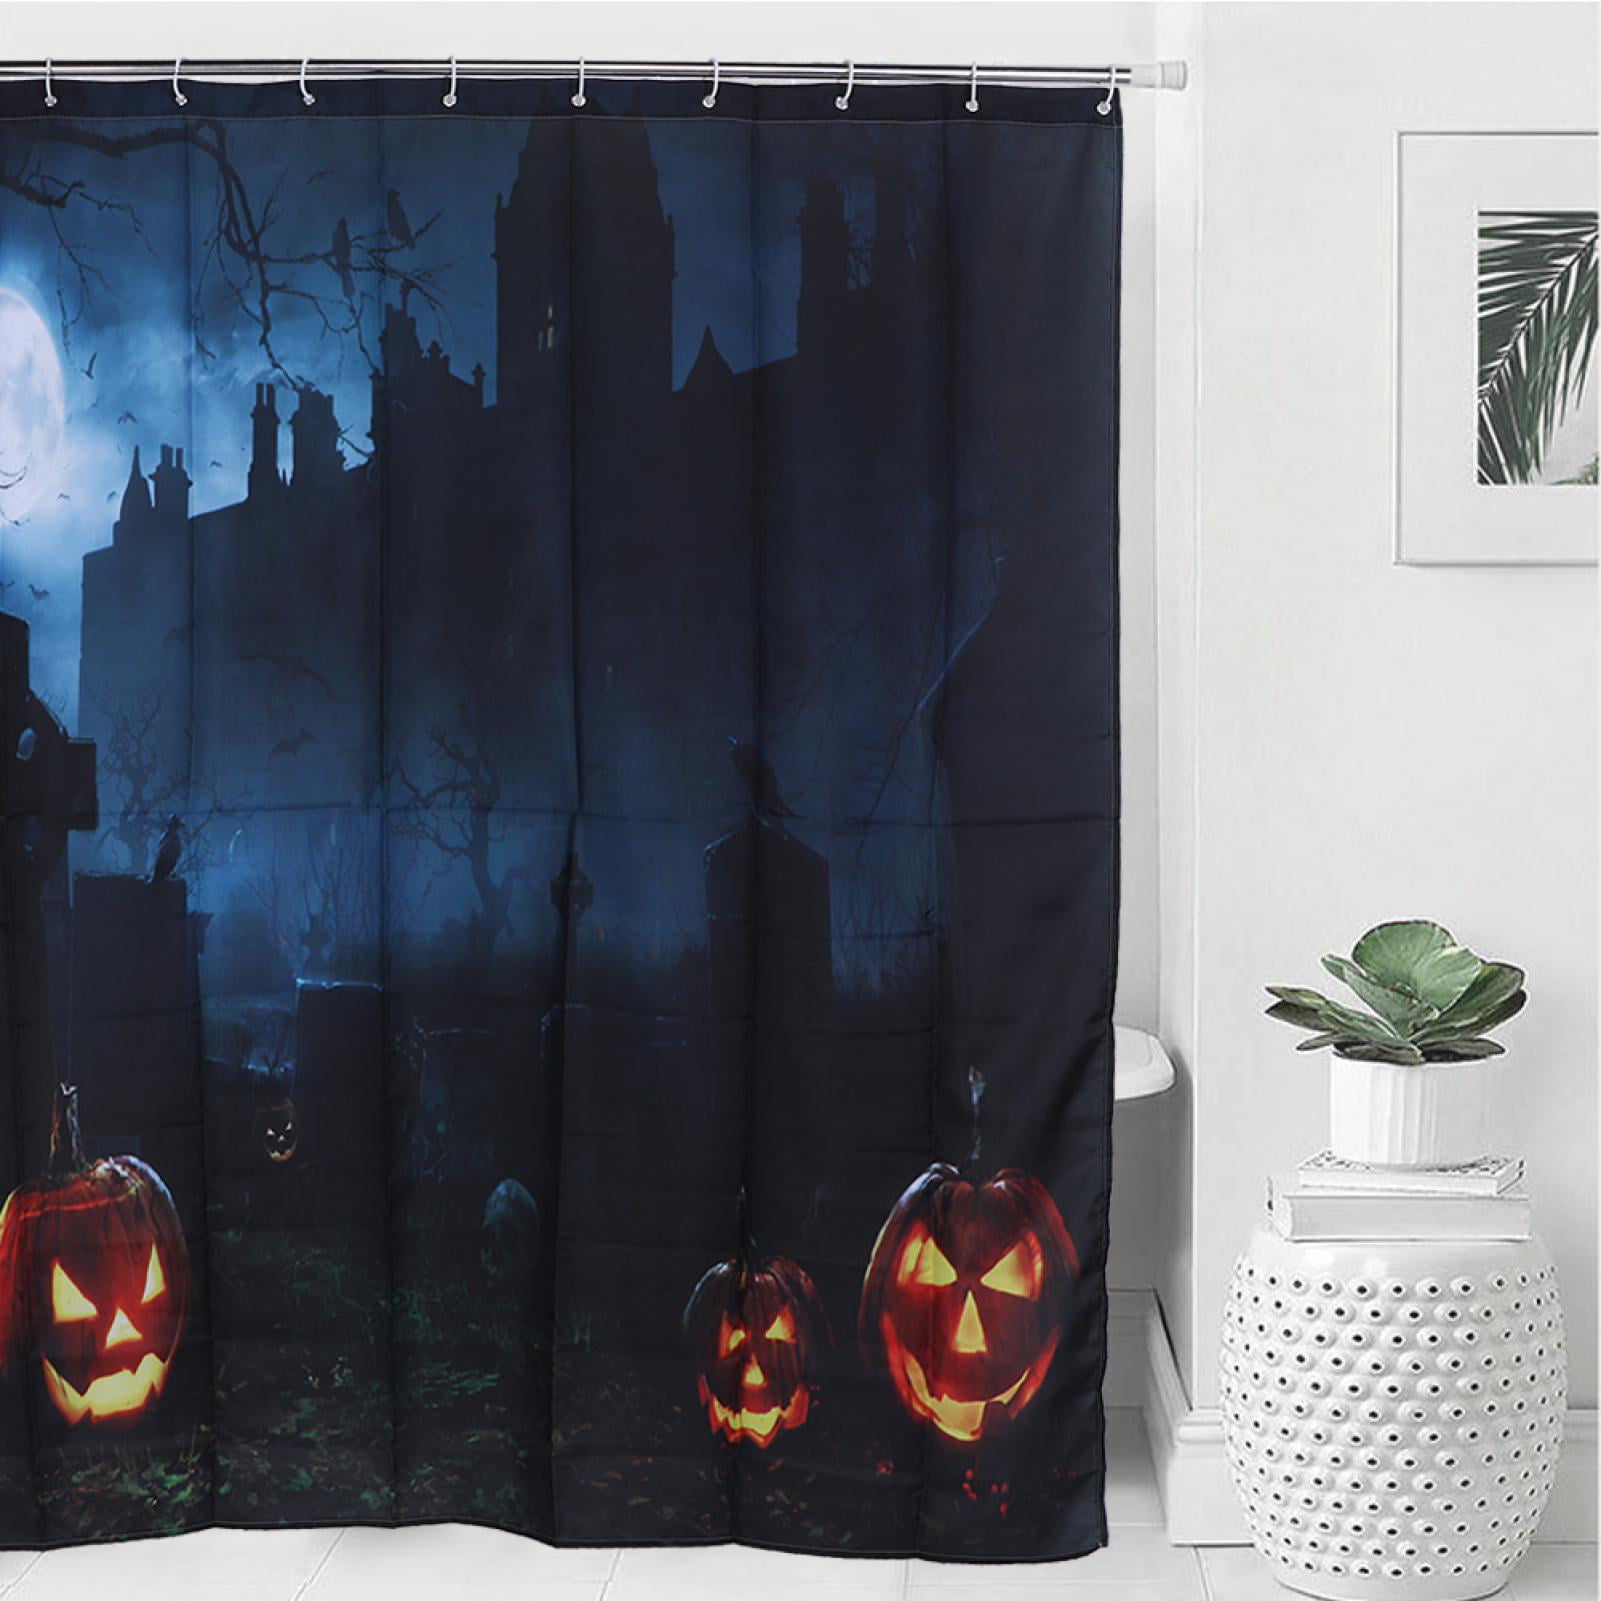 Halloween Pumpkin Waterproof Shower Curtain Cover Bathroom Supplies 188x188cm 